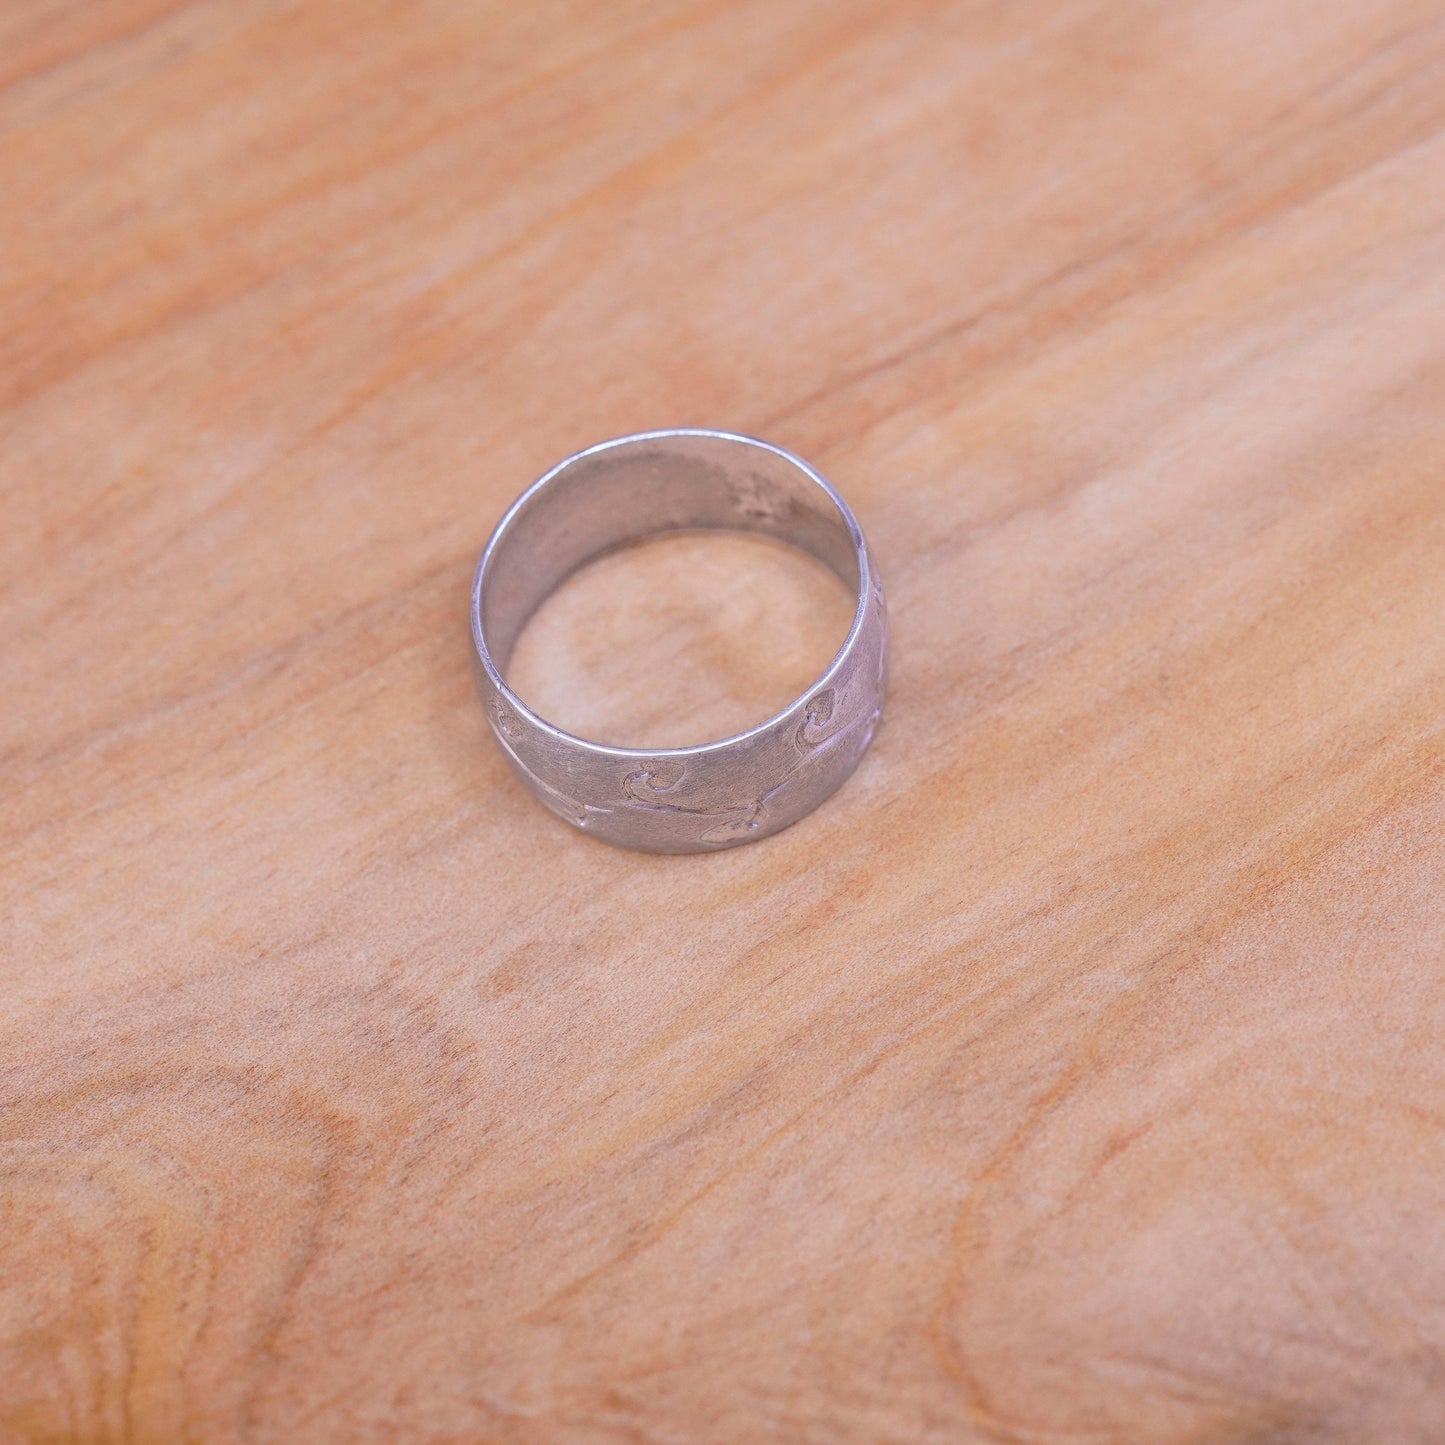 Size 6.75, vintage sterling silver handmade ring, vine textured 925 band